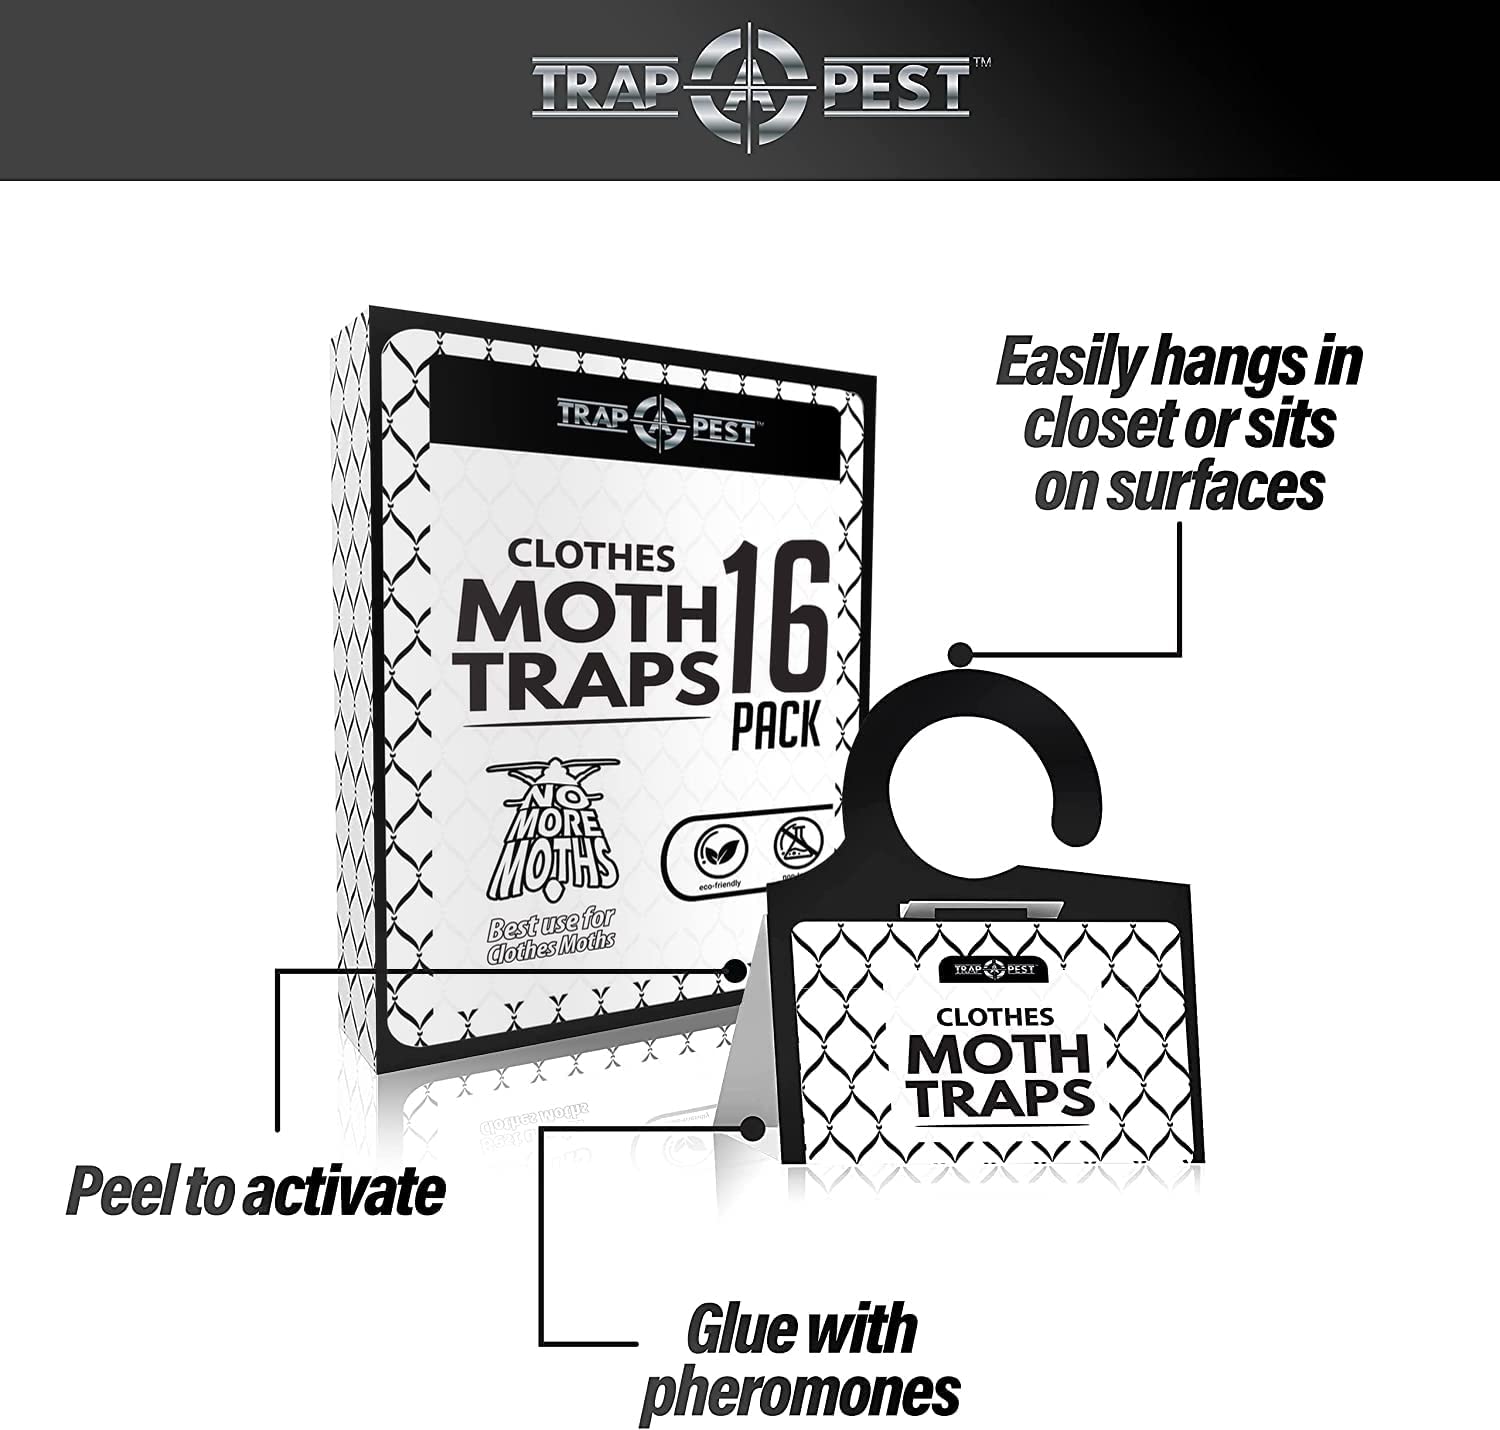 Clothes & Closet Moth Glue Board Traps 6 Count